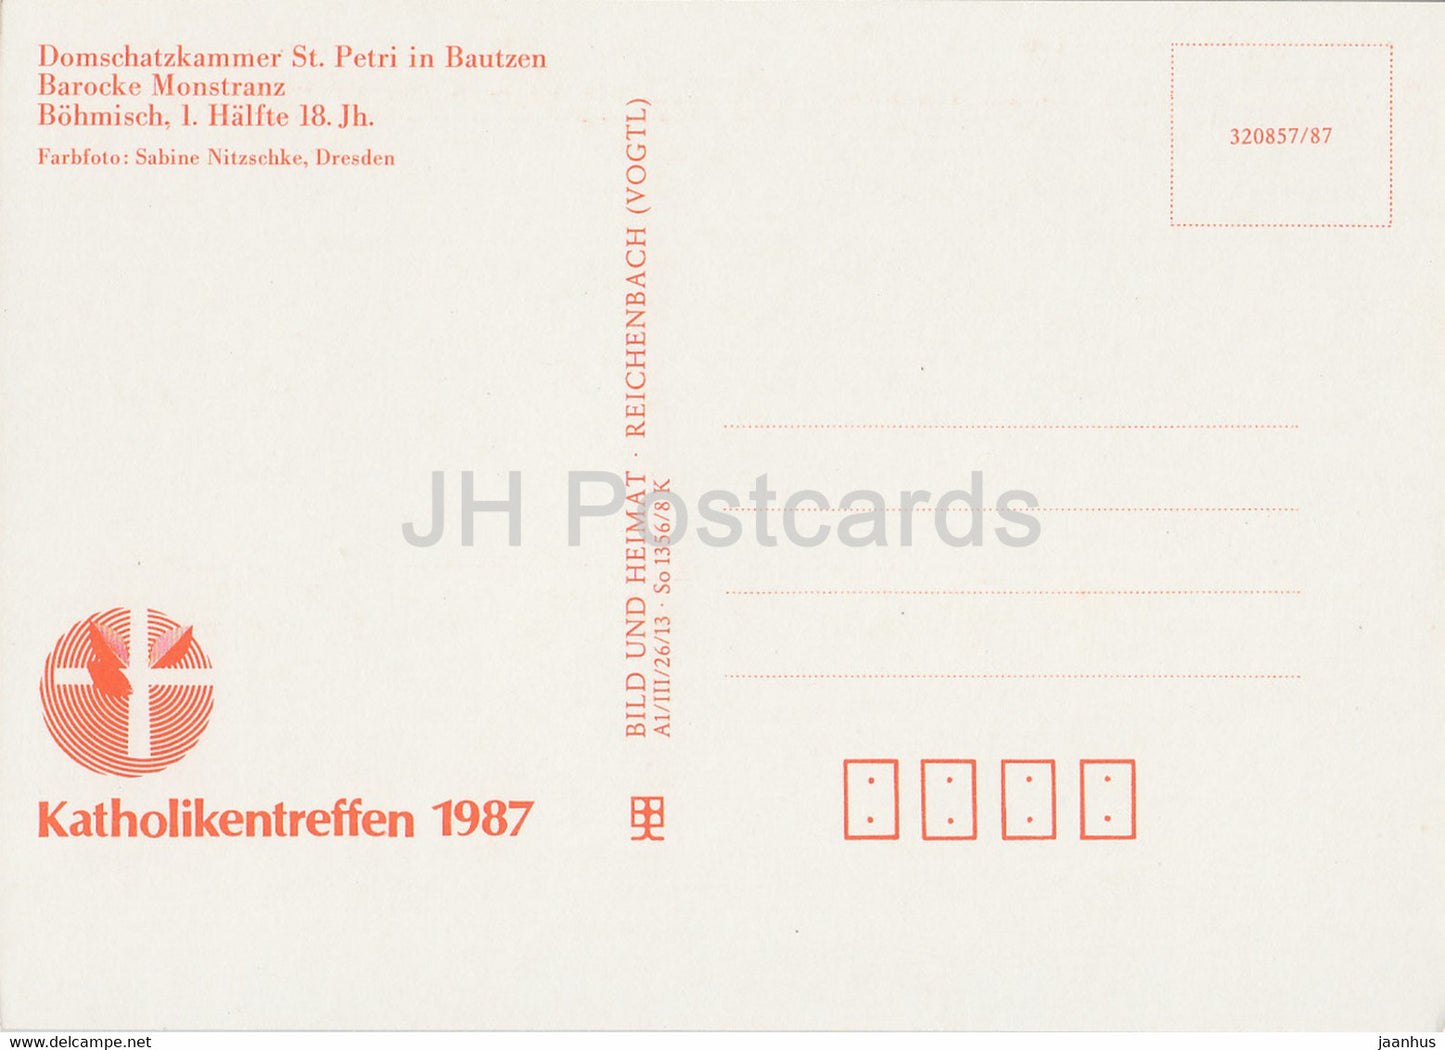 Barocke Monstranz - Domschatzkammer St Petri in Bautzen - 1987 - DDR Germany - unused